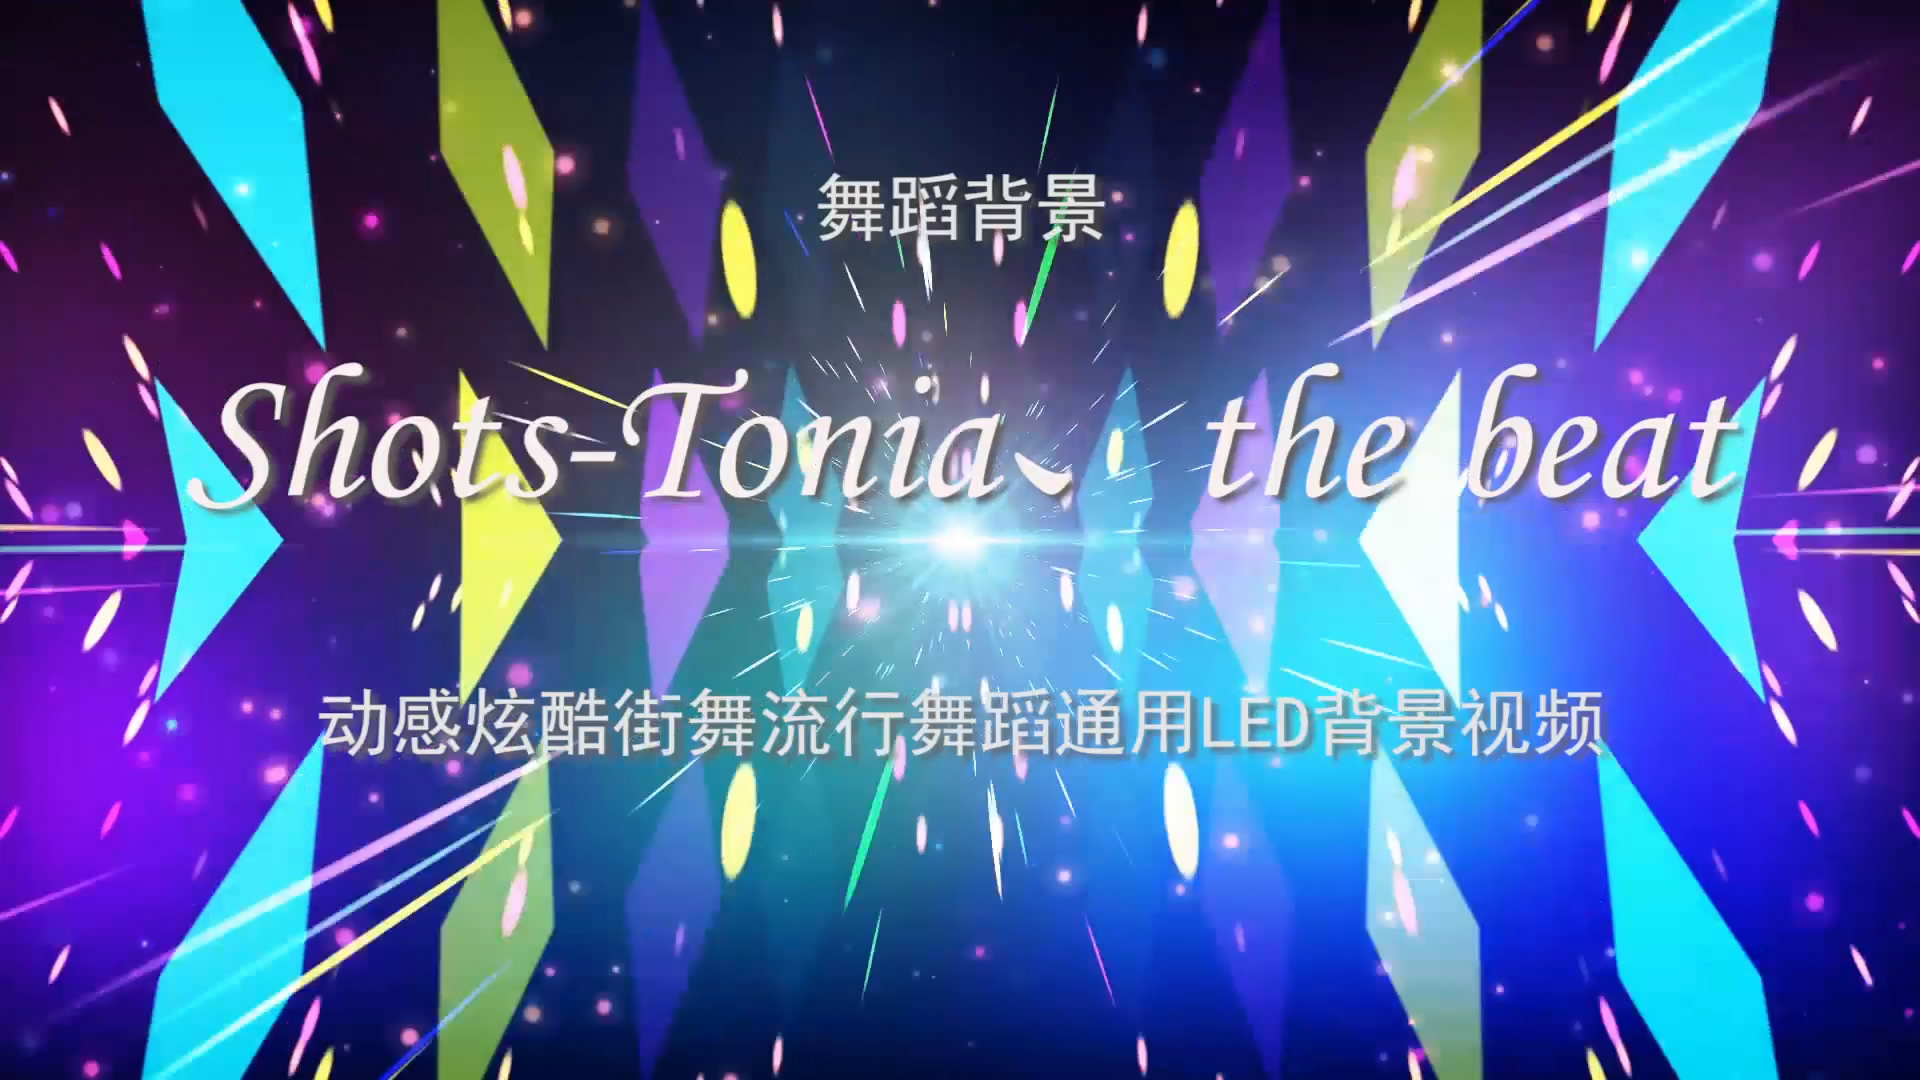 Shots-Tonia、the beat 破坏 动感炫酷街舞流行歌舞LED背景大屏幕视频素材TV